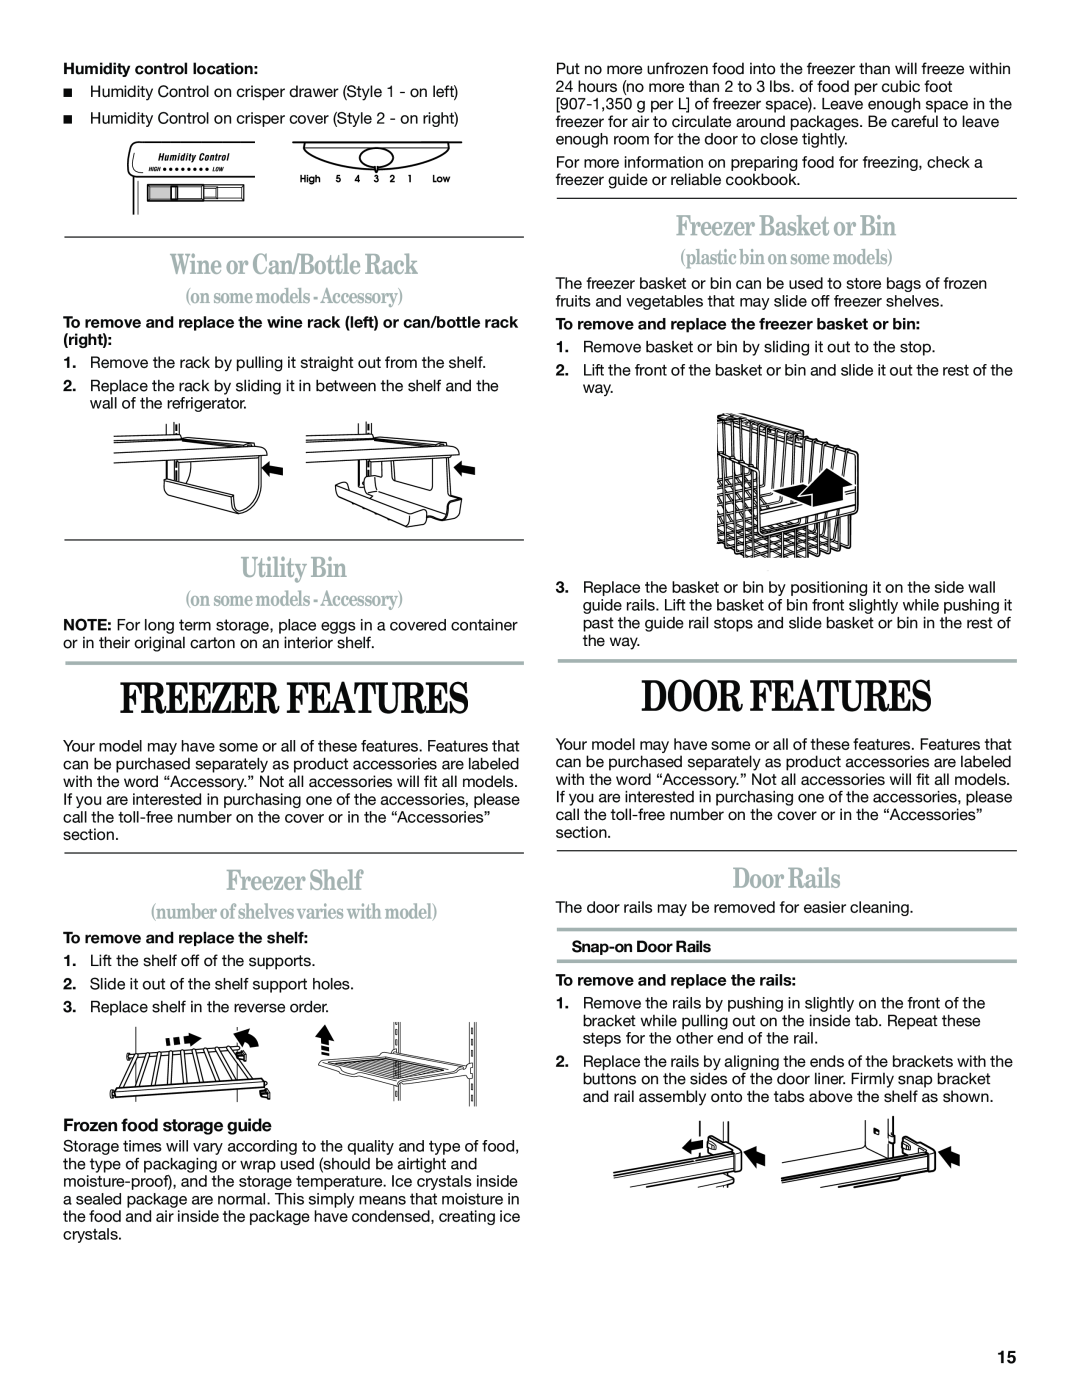 Whirlpool GS6SHANLB00 manual Freezer Features, Door Features, Wine or Can/Bottle Rack, Utility Bin, Freezer Basket or Bin 